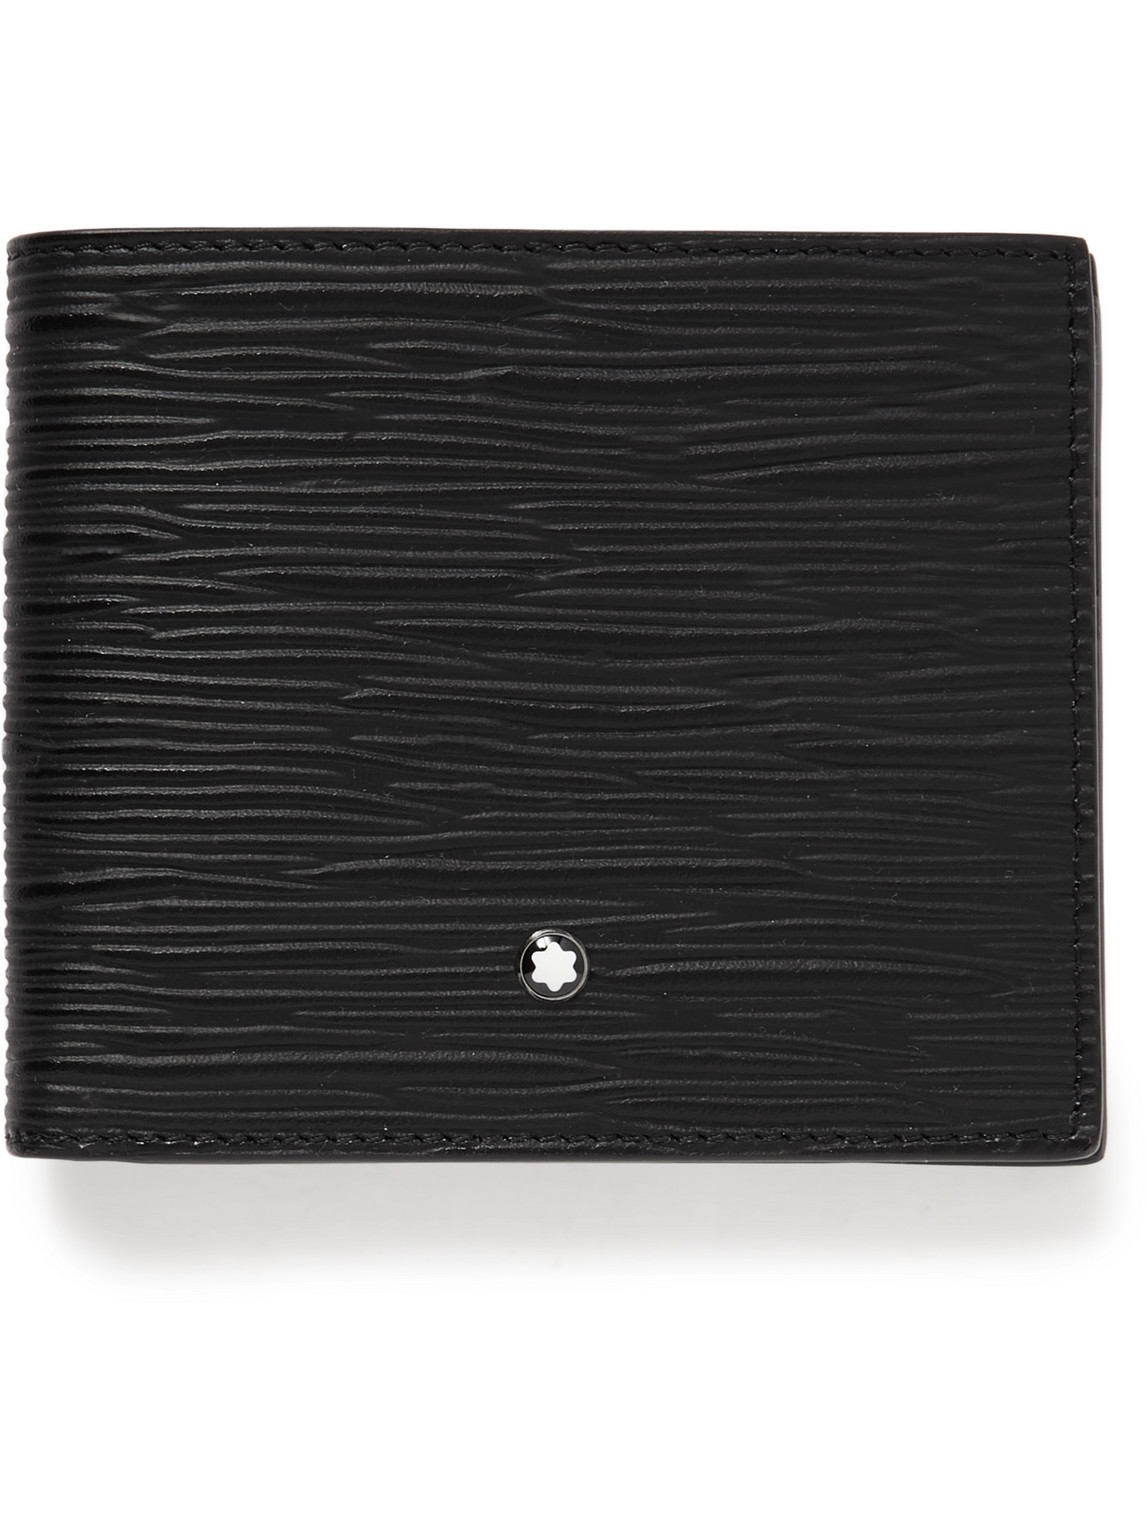 MONTBLANC Meisterstück 4810 Cross-Grain Leather Billfold Wallet for Men